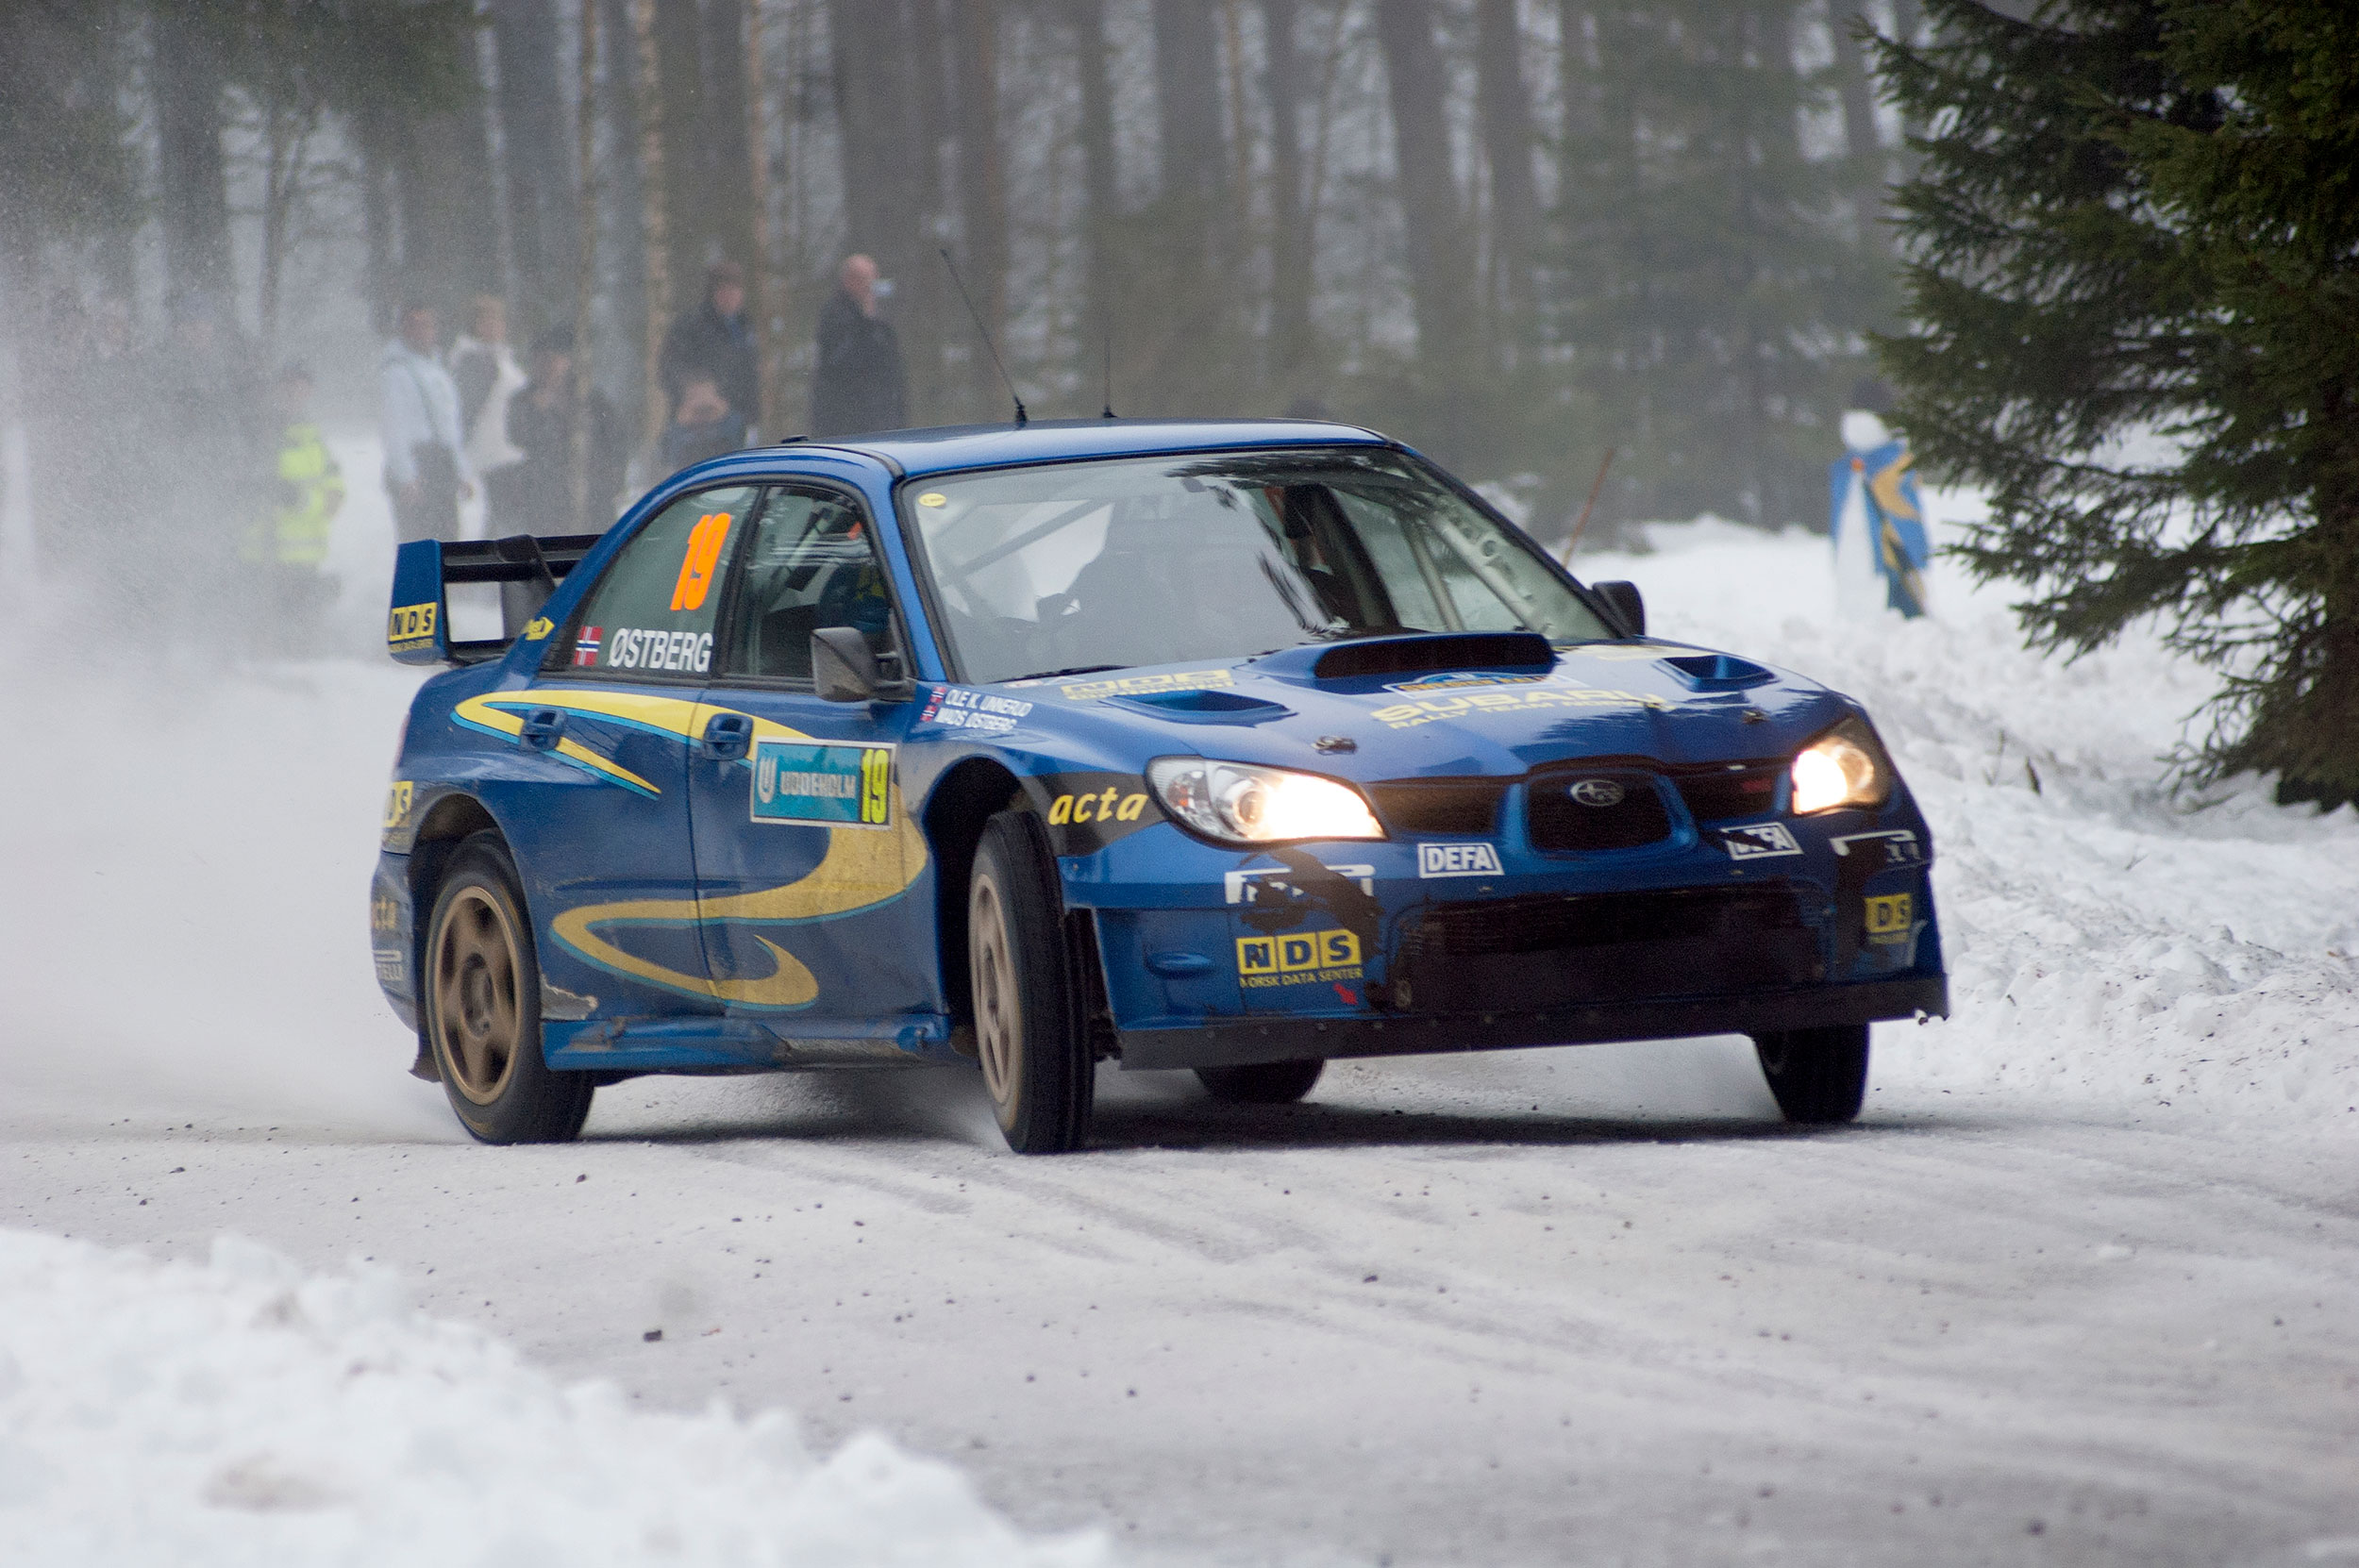 WRC, Rally Schweden, Subaru WRC, Ostberg, Fotoreportage, Willi Nothers